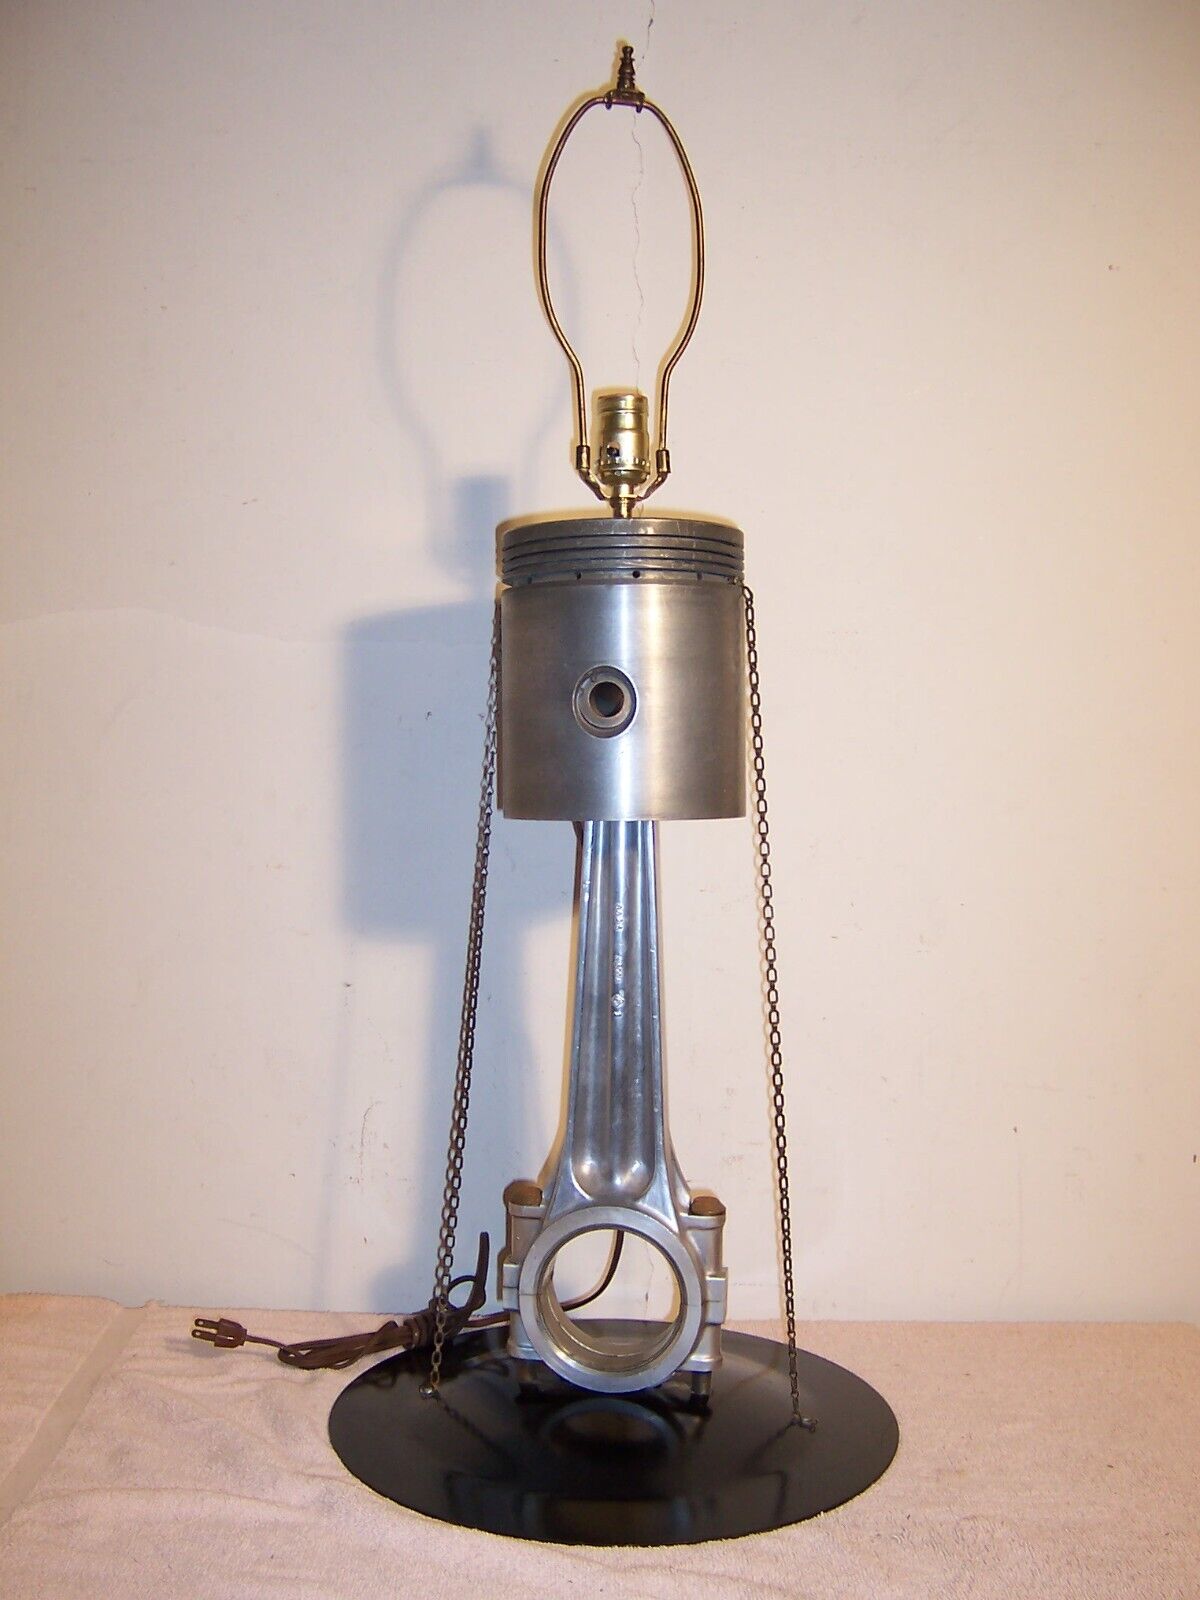 Large Vintage Handmade Piston Connecting Rod Table Lamp Old Repurposed Engine